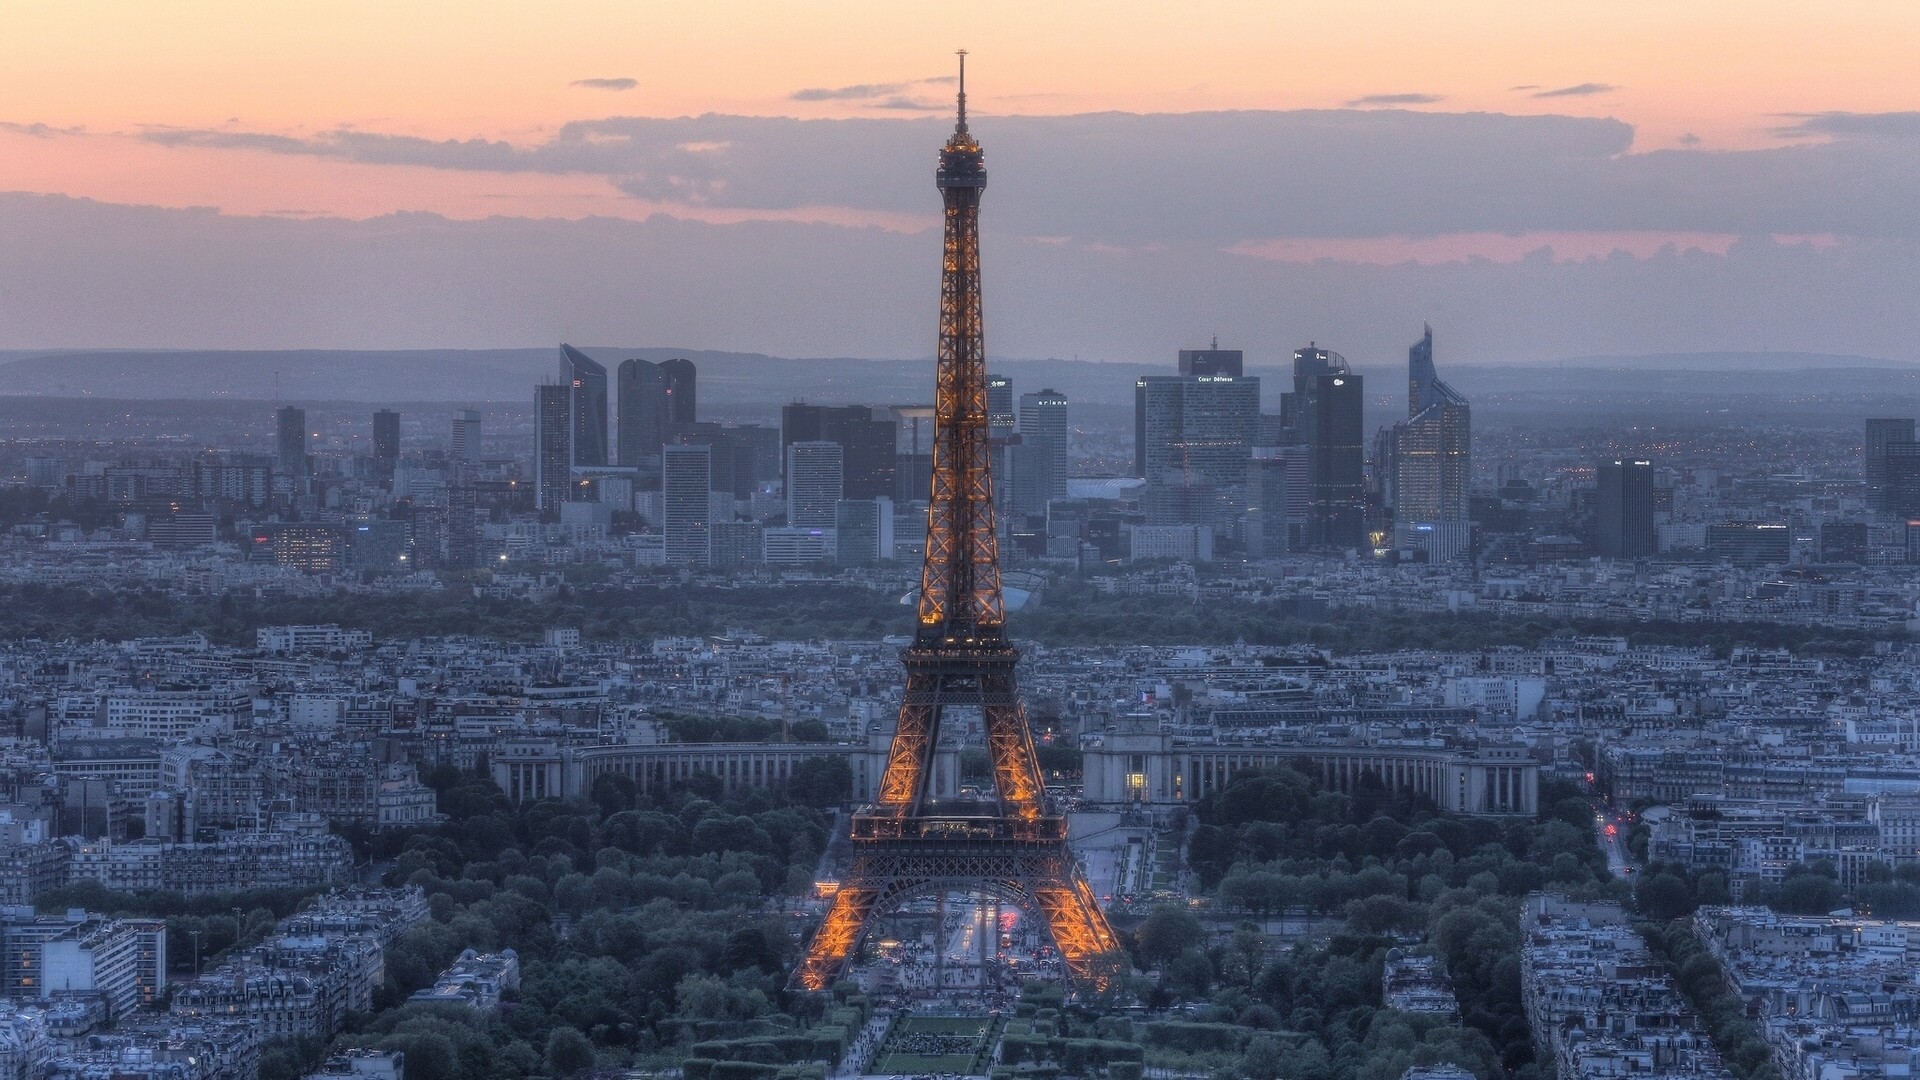 General 1920x1080 Paris Eiffel Tower city cityscape aerial view France landmark Europe